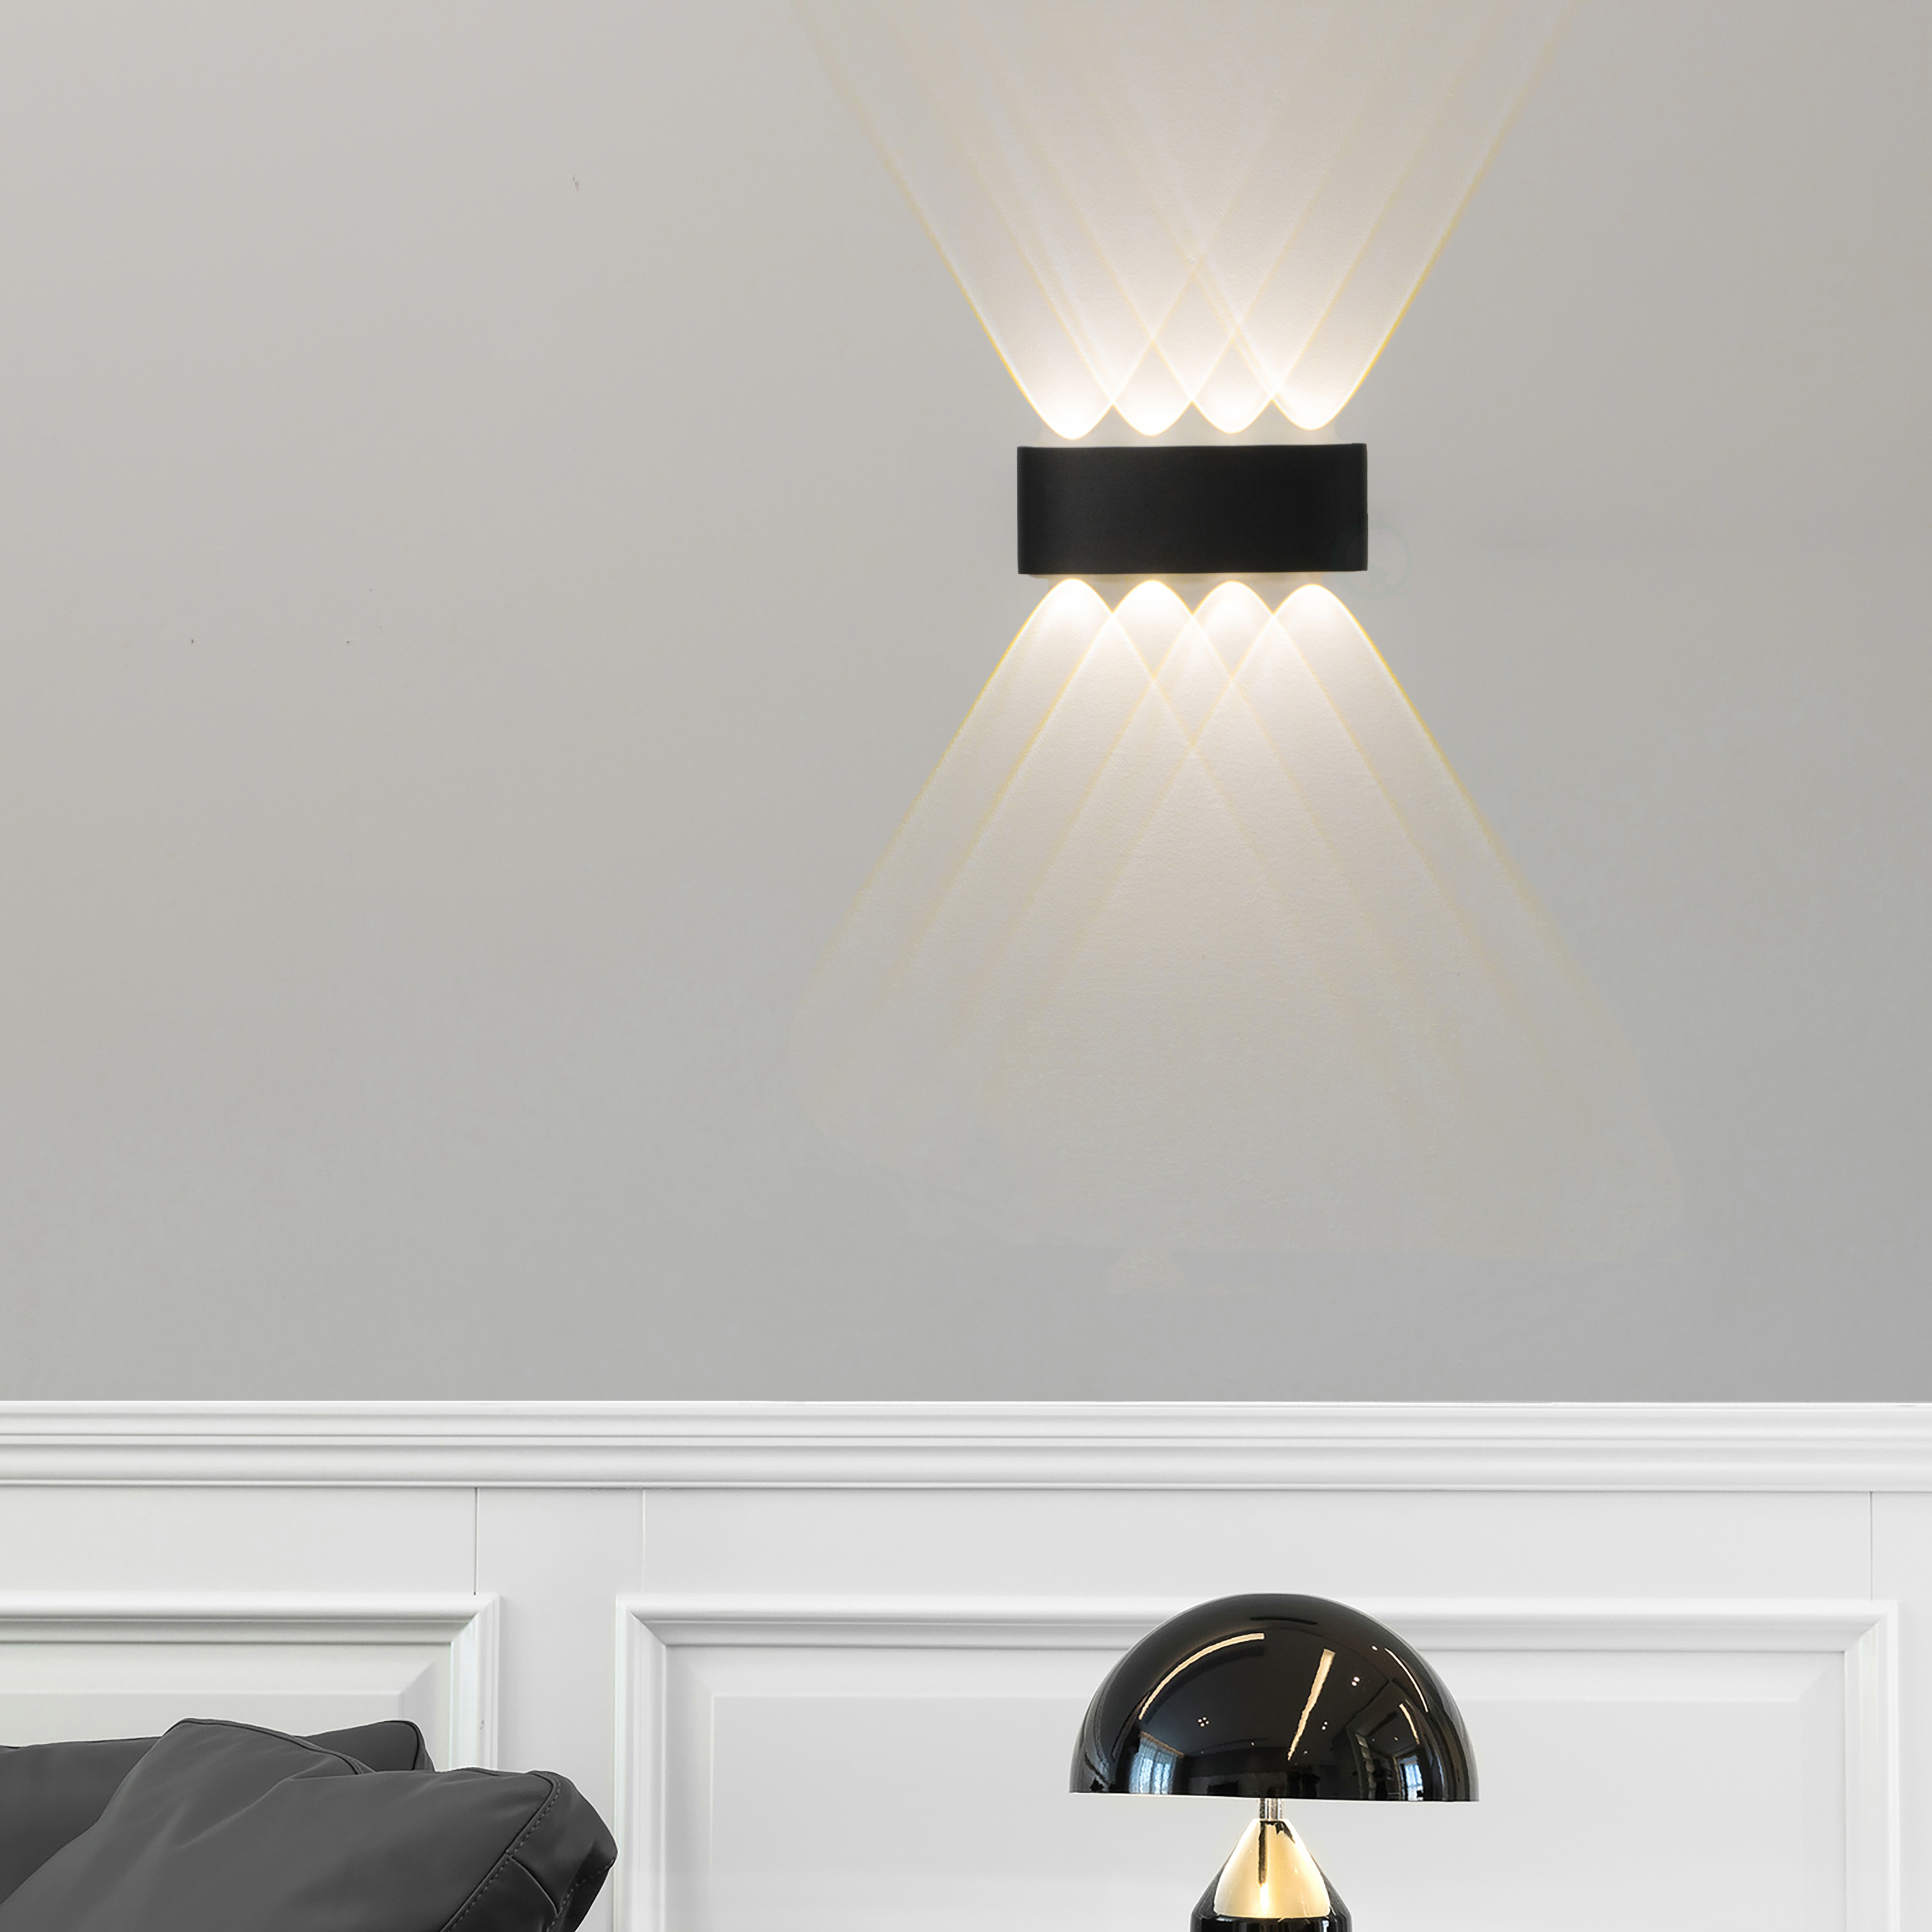 Black Contemporary Decorative Waterproof Aluminum Wall Lamp For Indoors And Outdoors, 8 Watt Cool White 4000K - Black 8Watt